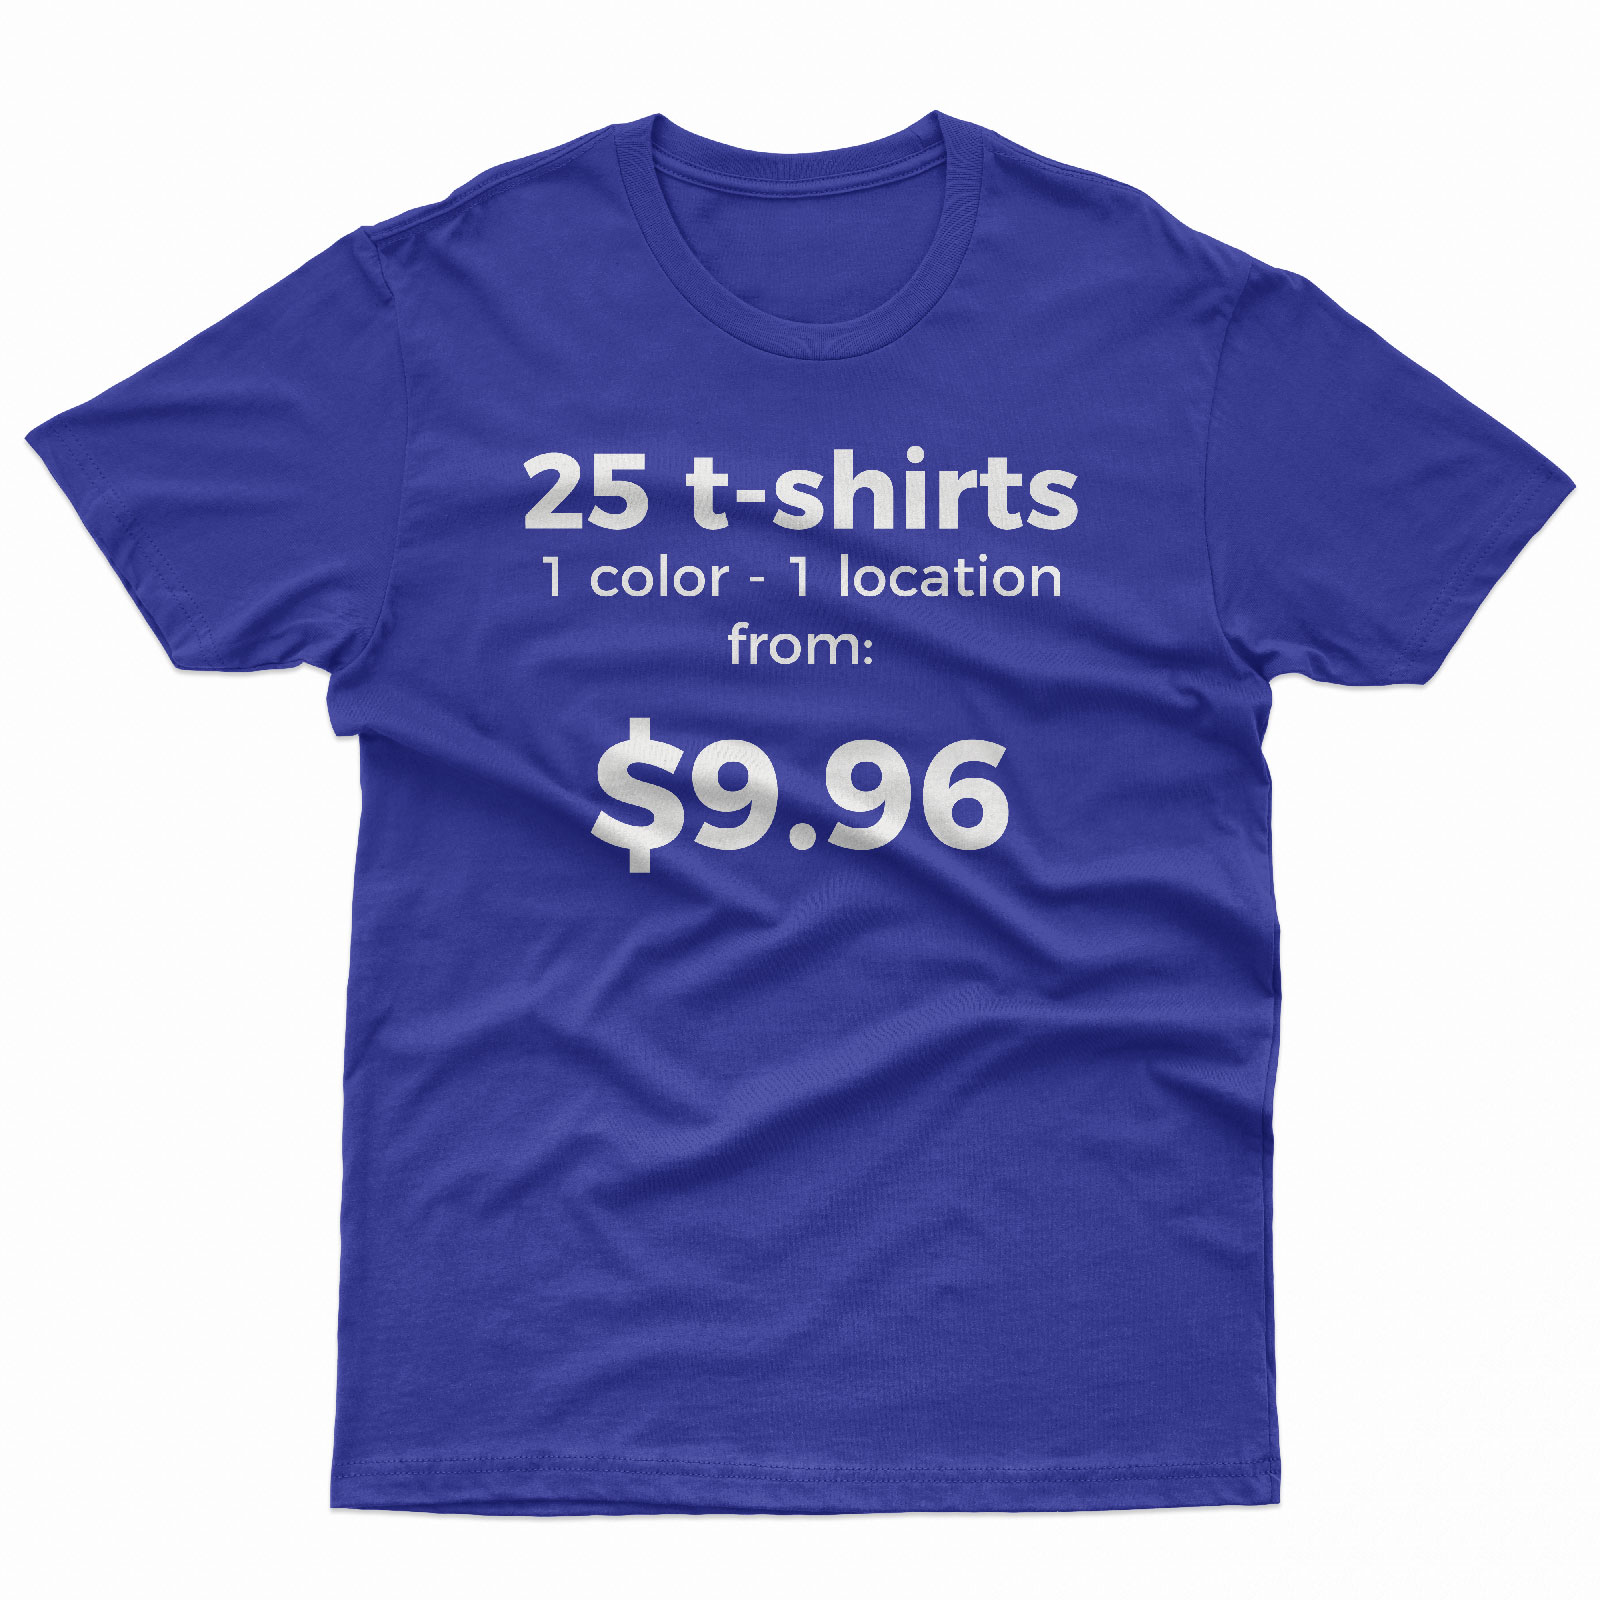 25 Custom Printed T-Shirts - 1 Location